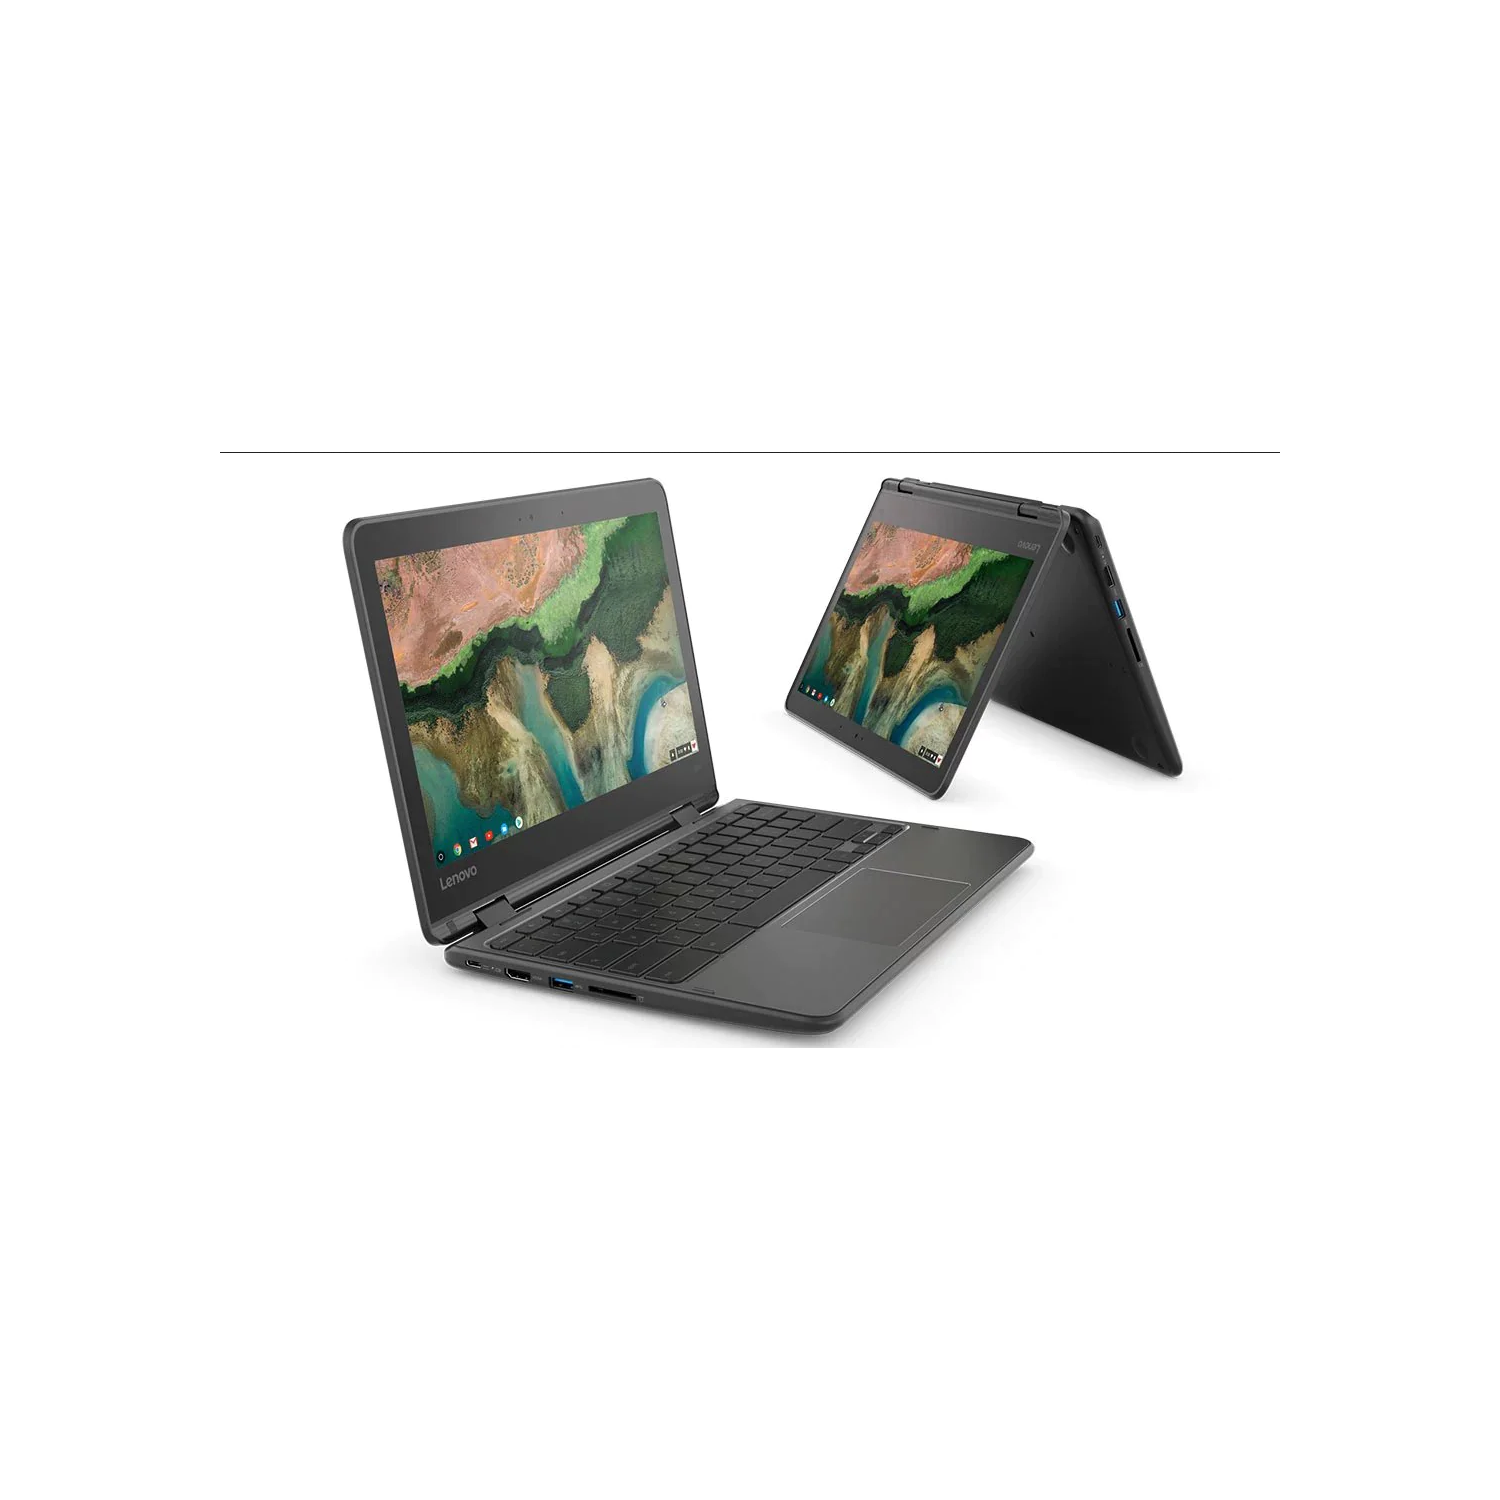 Refurbished (Fair) - Lenovo Yoga 300E 11.6" Chromebook - not touchscreen (Quad Core MediaTek 8173C, 4GB RAM, 32GB SSD, Webcam, Chrome OS)